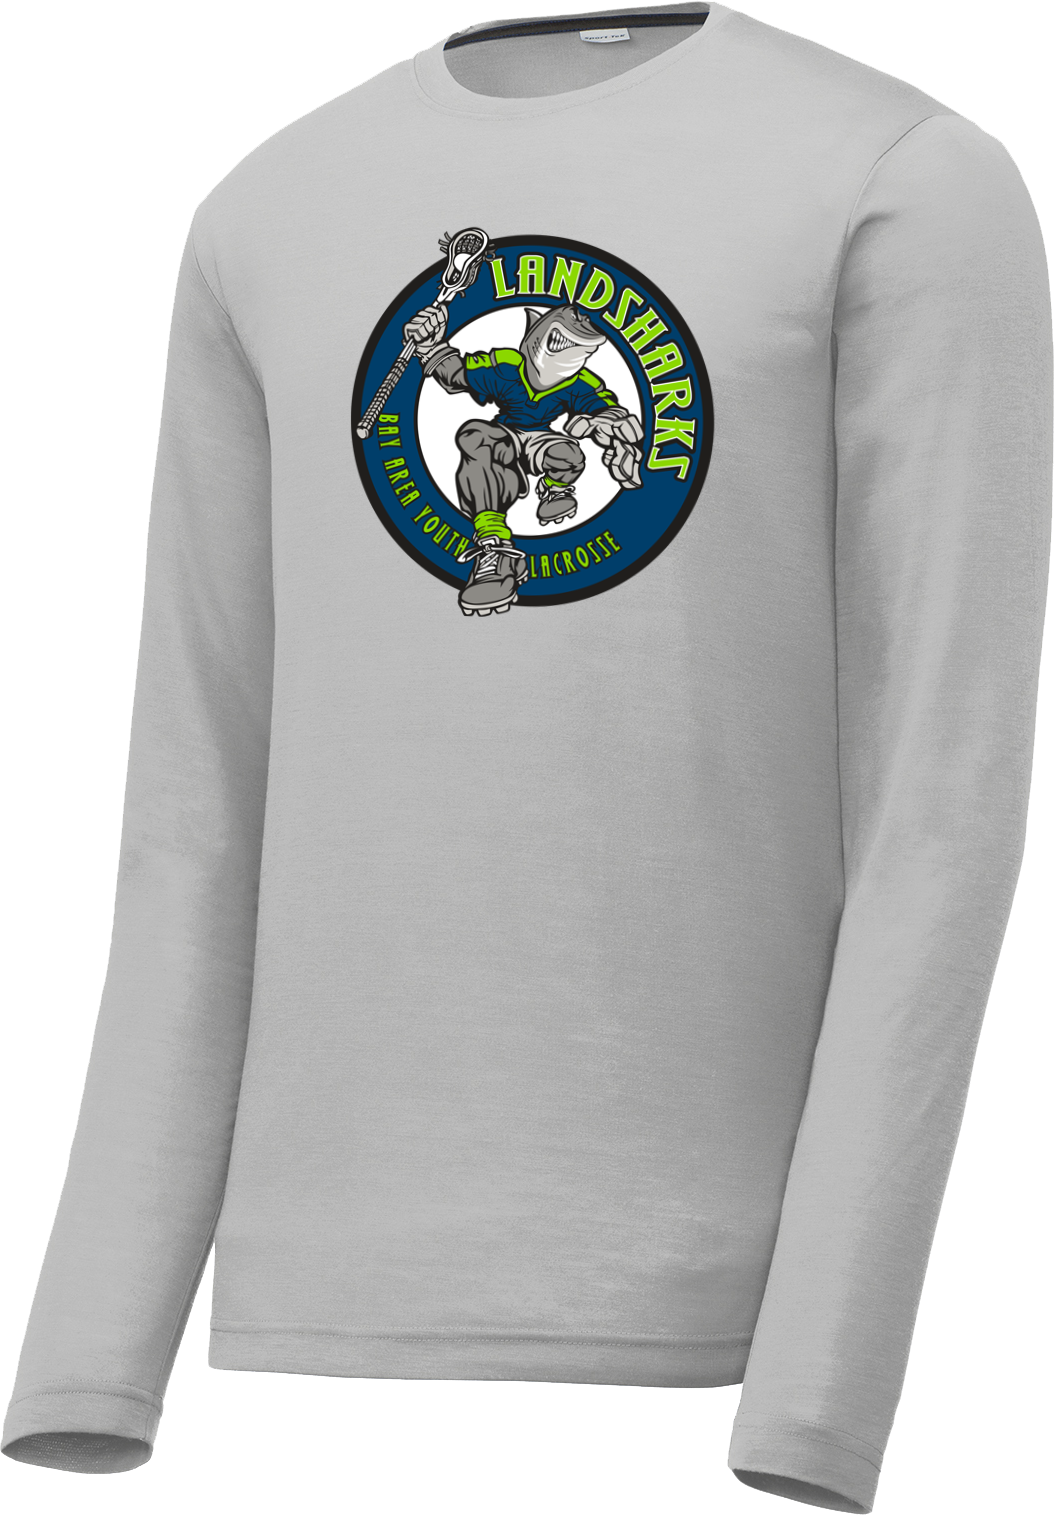 Bay Area Landsharks Grey Long Sleeve CottonTouch Performance Shirt